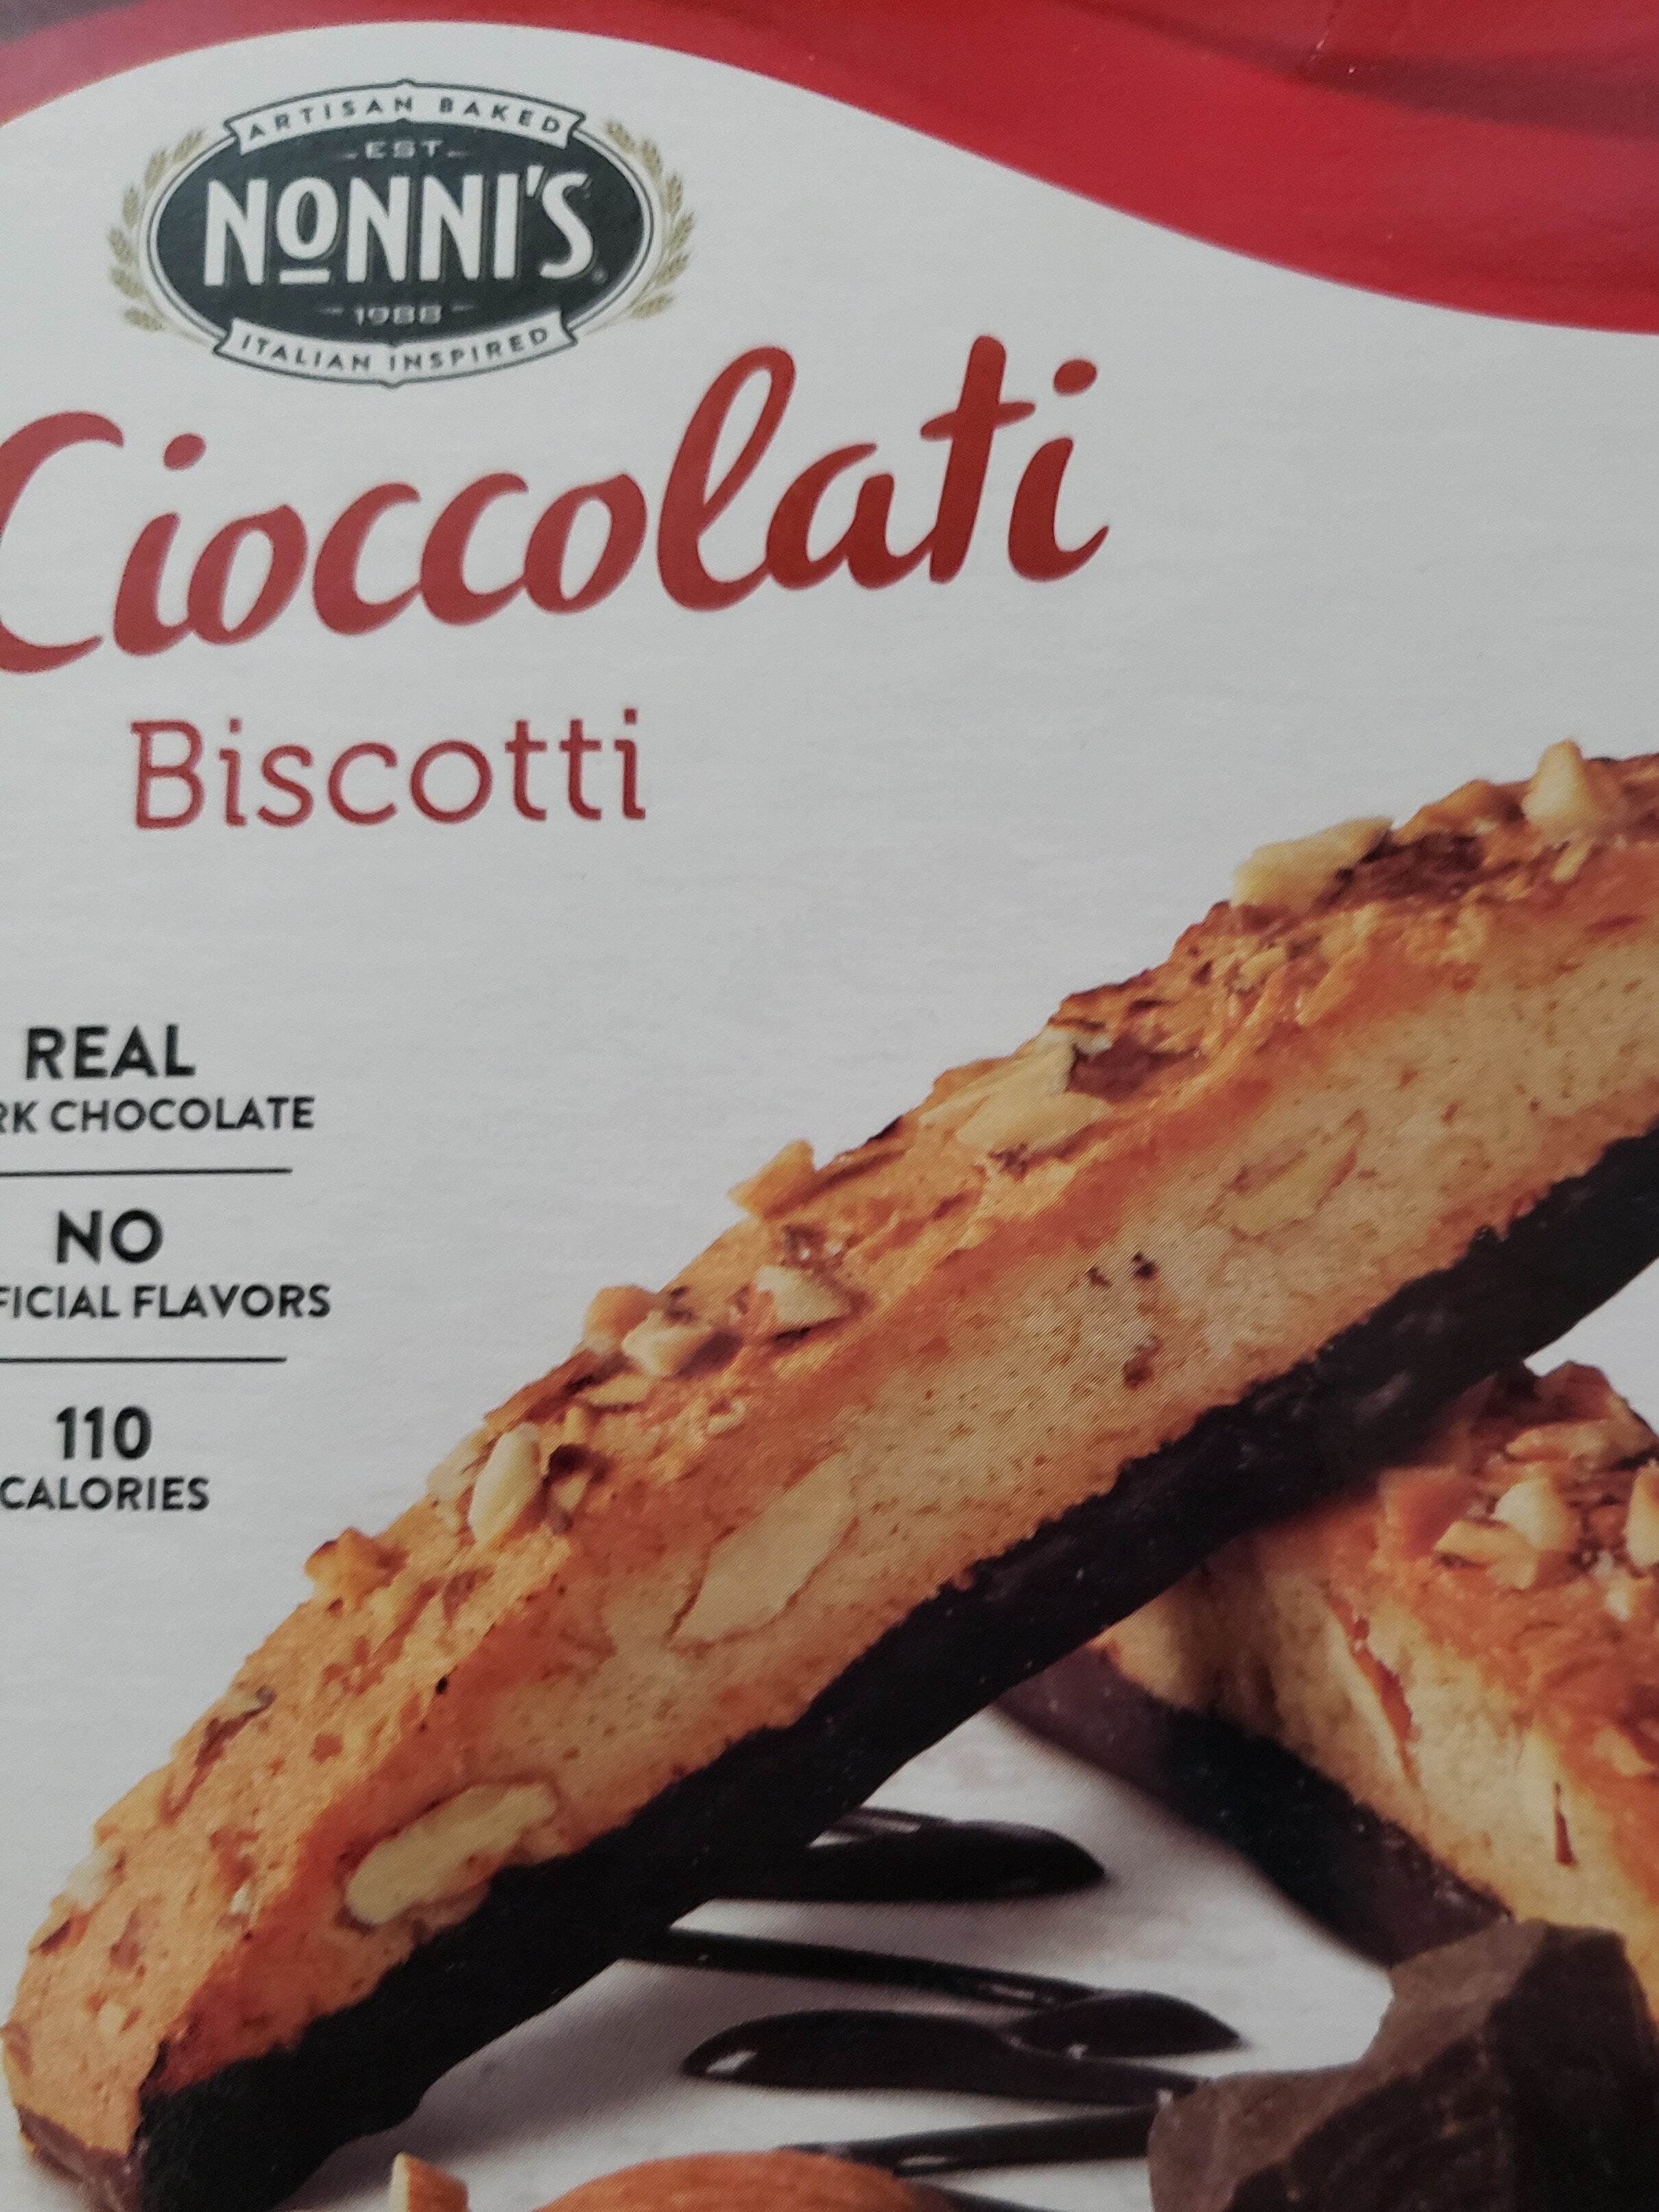 Biscotti - Product - en